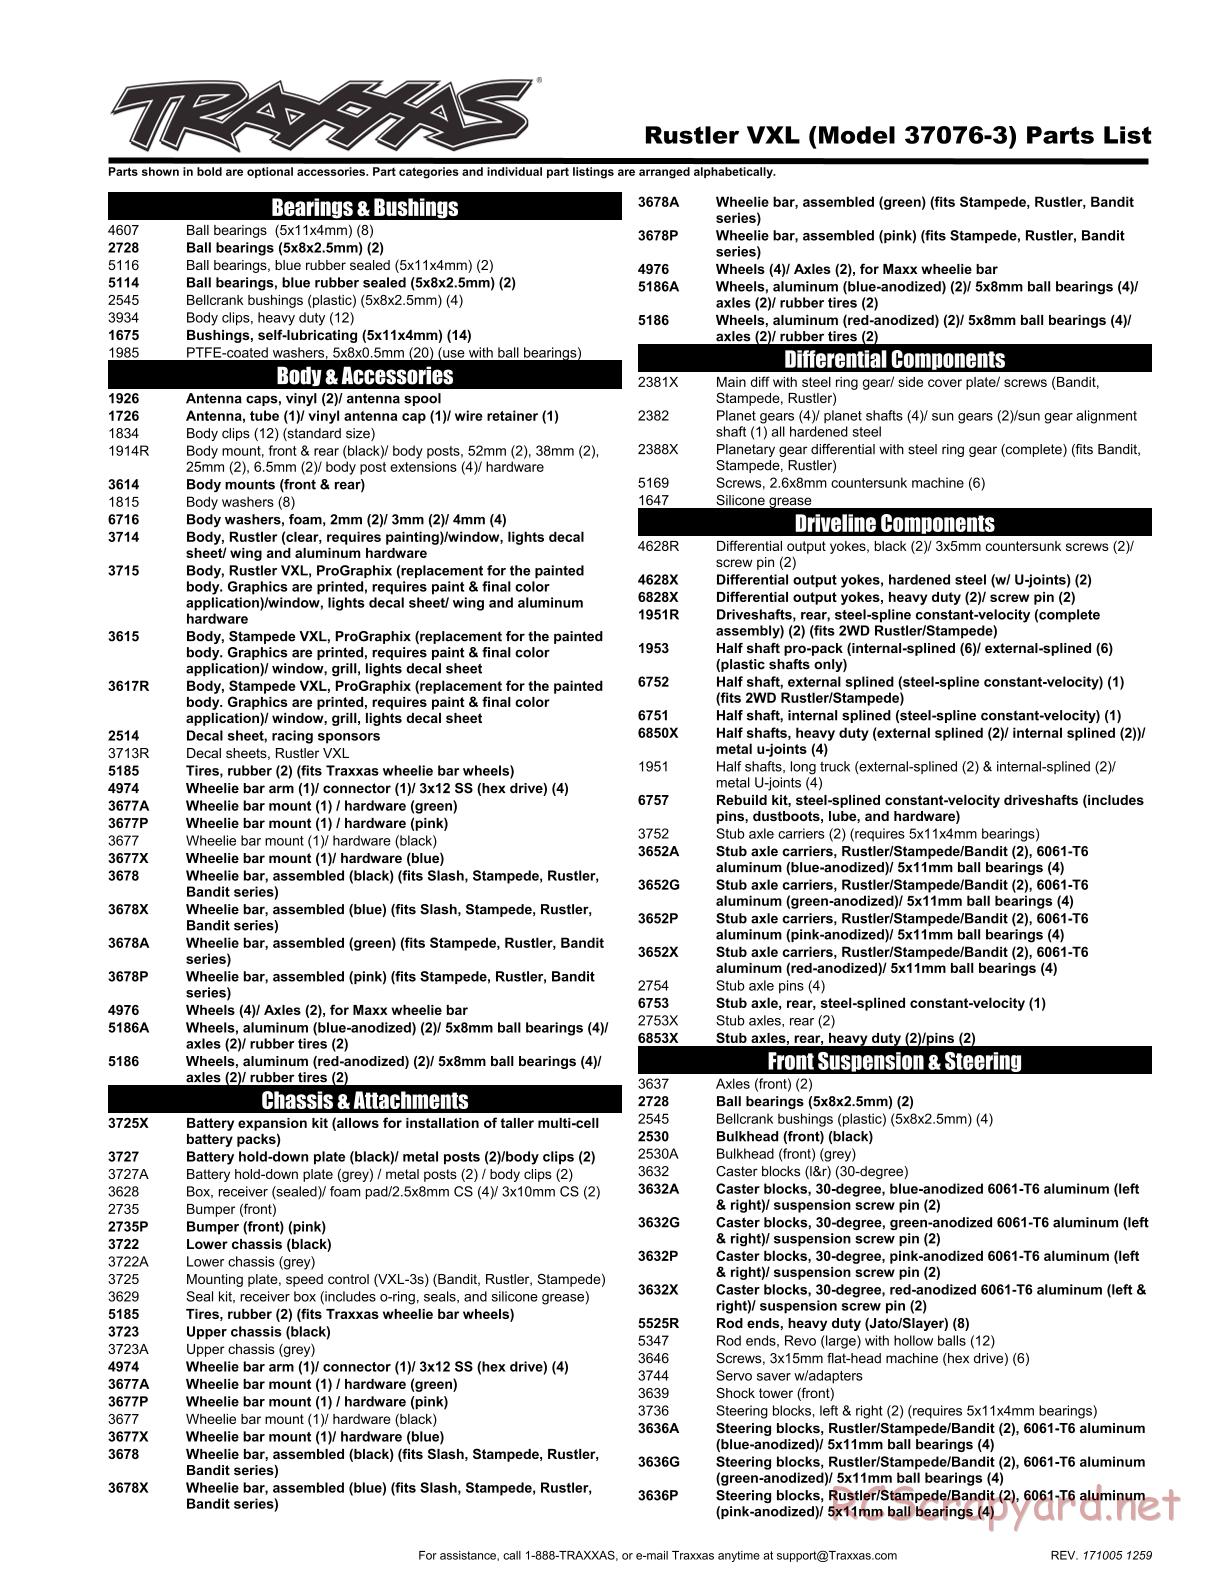 Traxxas - Rustler VXL TSM (2015) - Parts List - Page 1